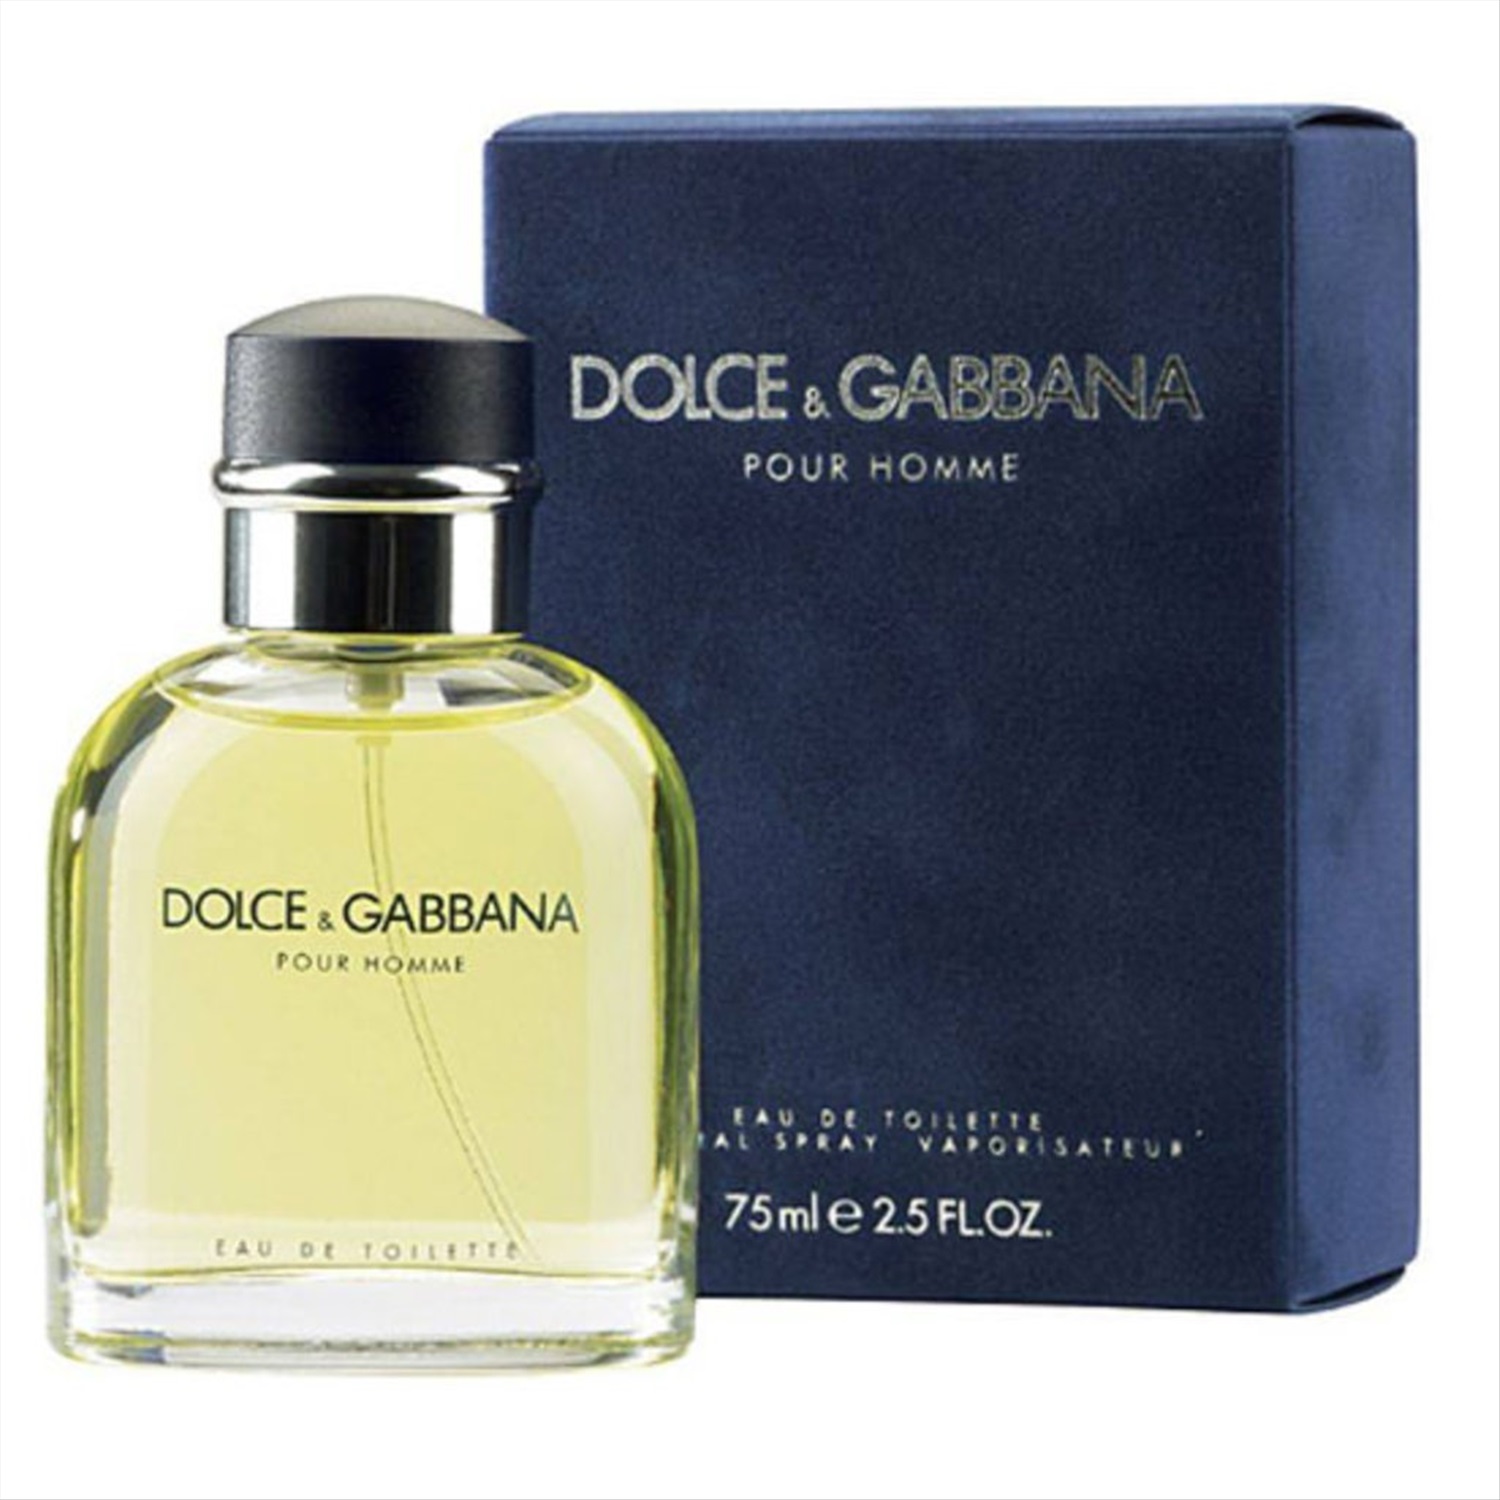 Дольче габбана пур хом. Dolce Gabbana pour homme 75ml. Dolce Gabbana pour homme 2. Dolce&Gabbana (m) 75ml EDT. Туалетная вода Дольче Габбана мужская Голден.